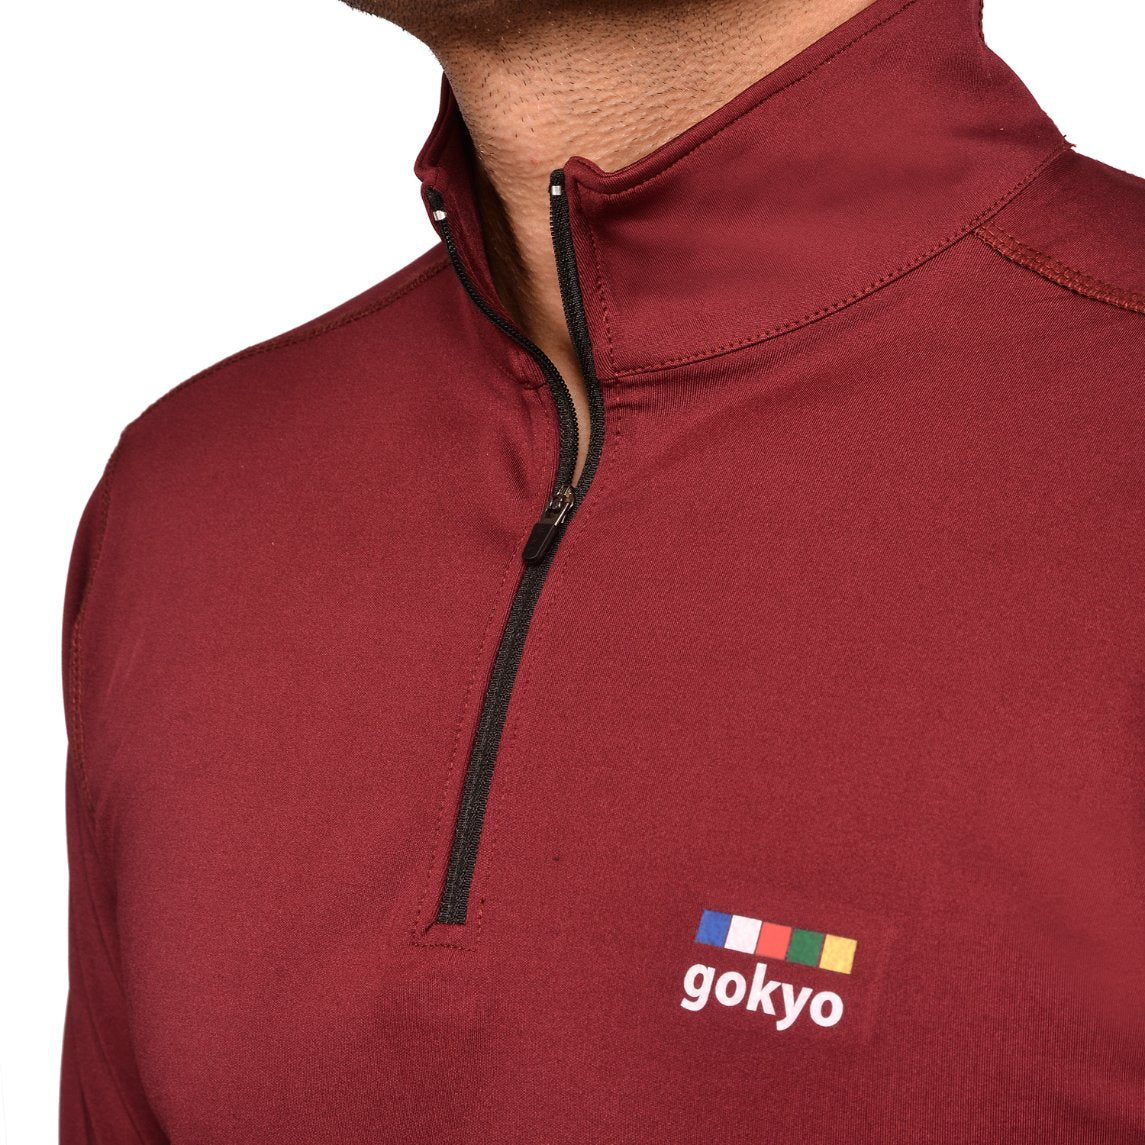 Buy Gokyo K2 Ultrasoft Trekking Tshirt | Trekking & Hiking T-shirts at Gokyo Outdoor Clothing & Gear